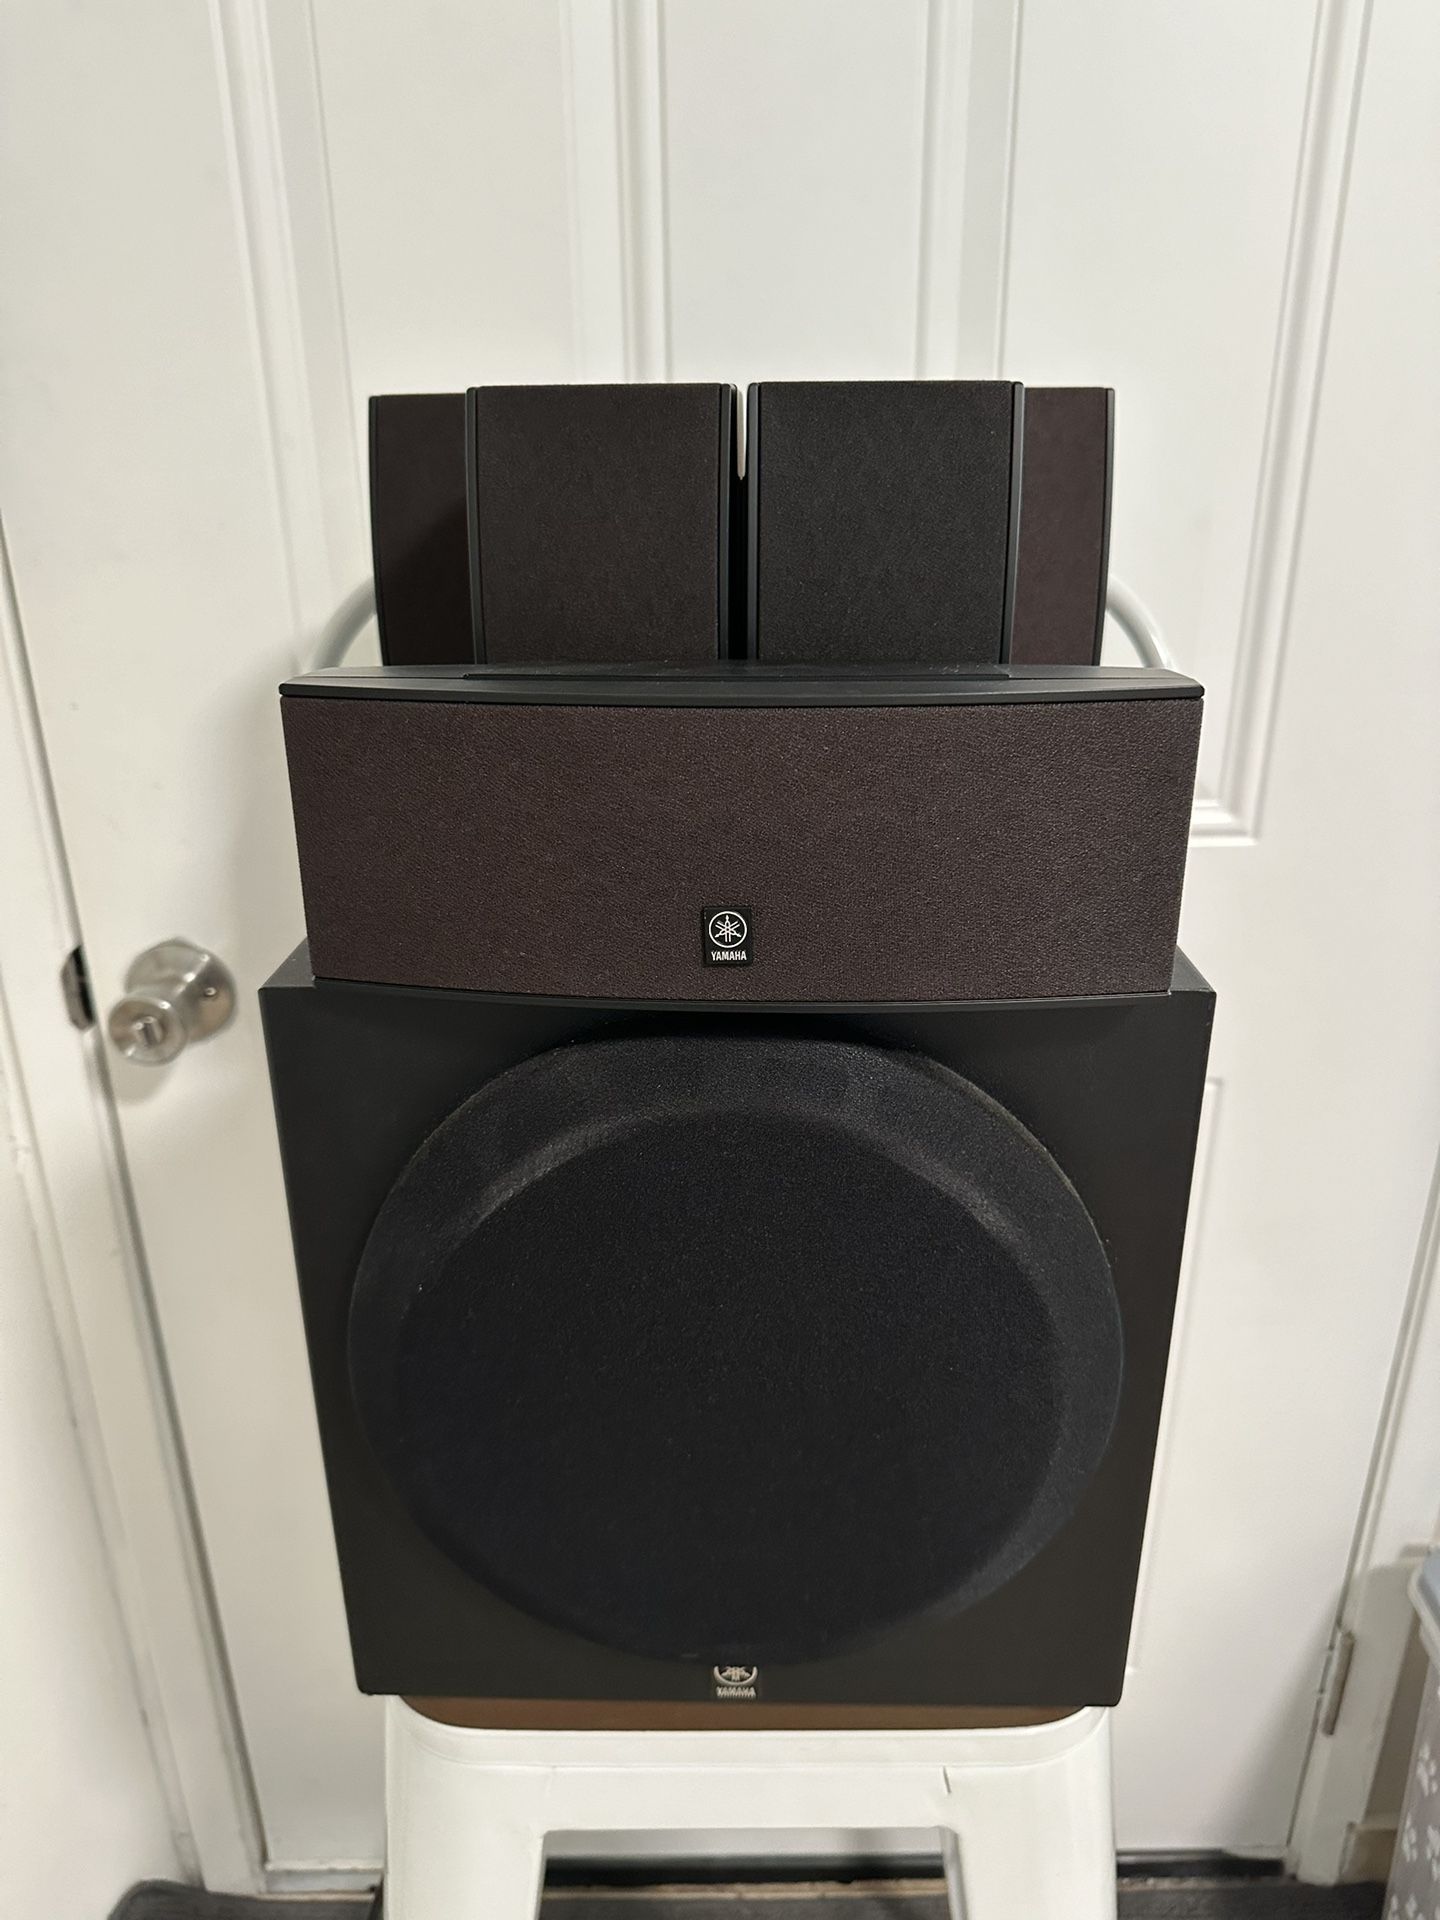 Yamaha 5.1 Surround Sounds Speakers and Sub